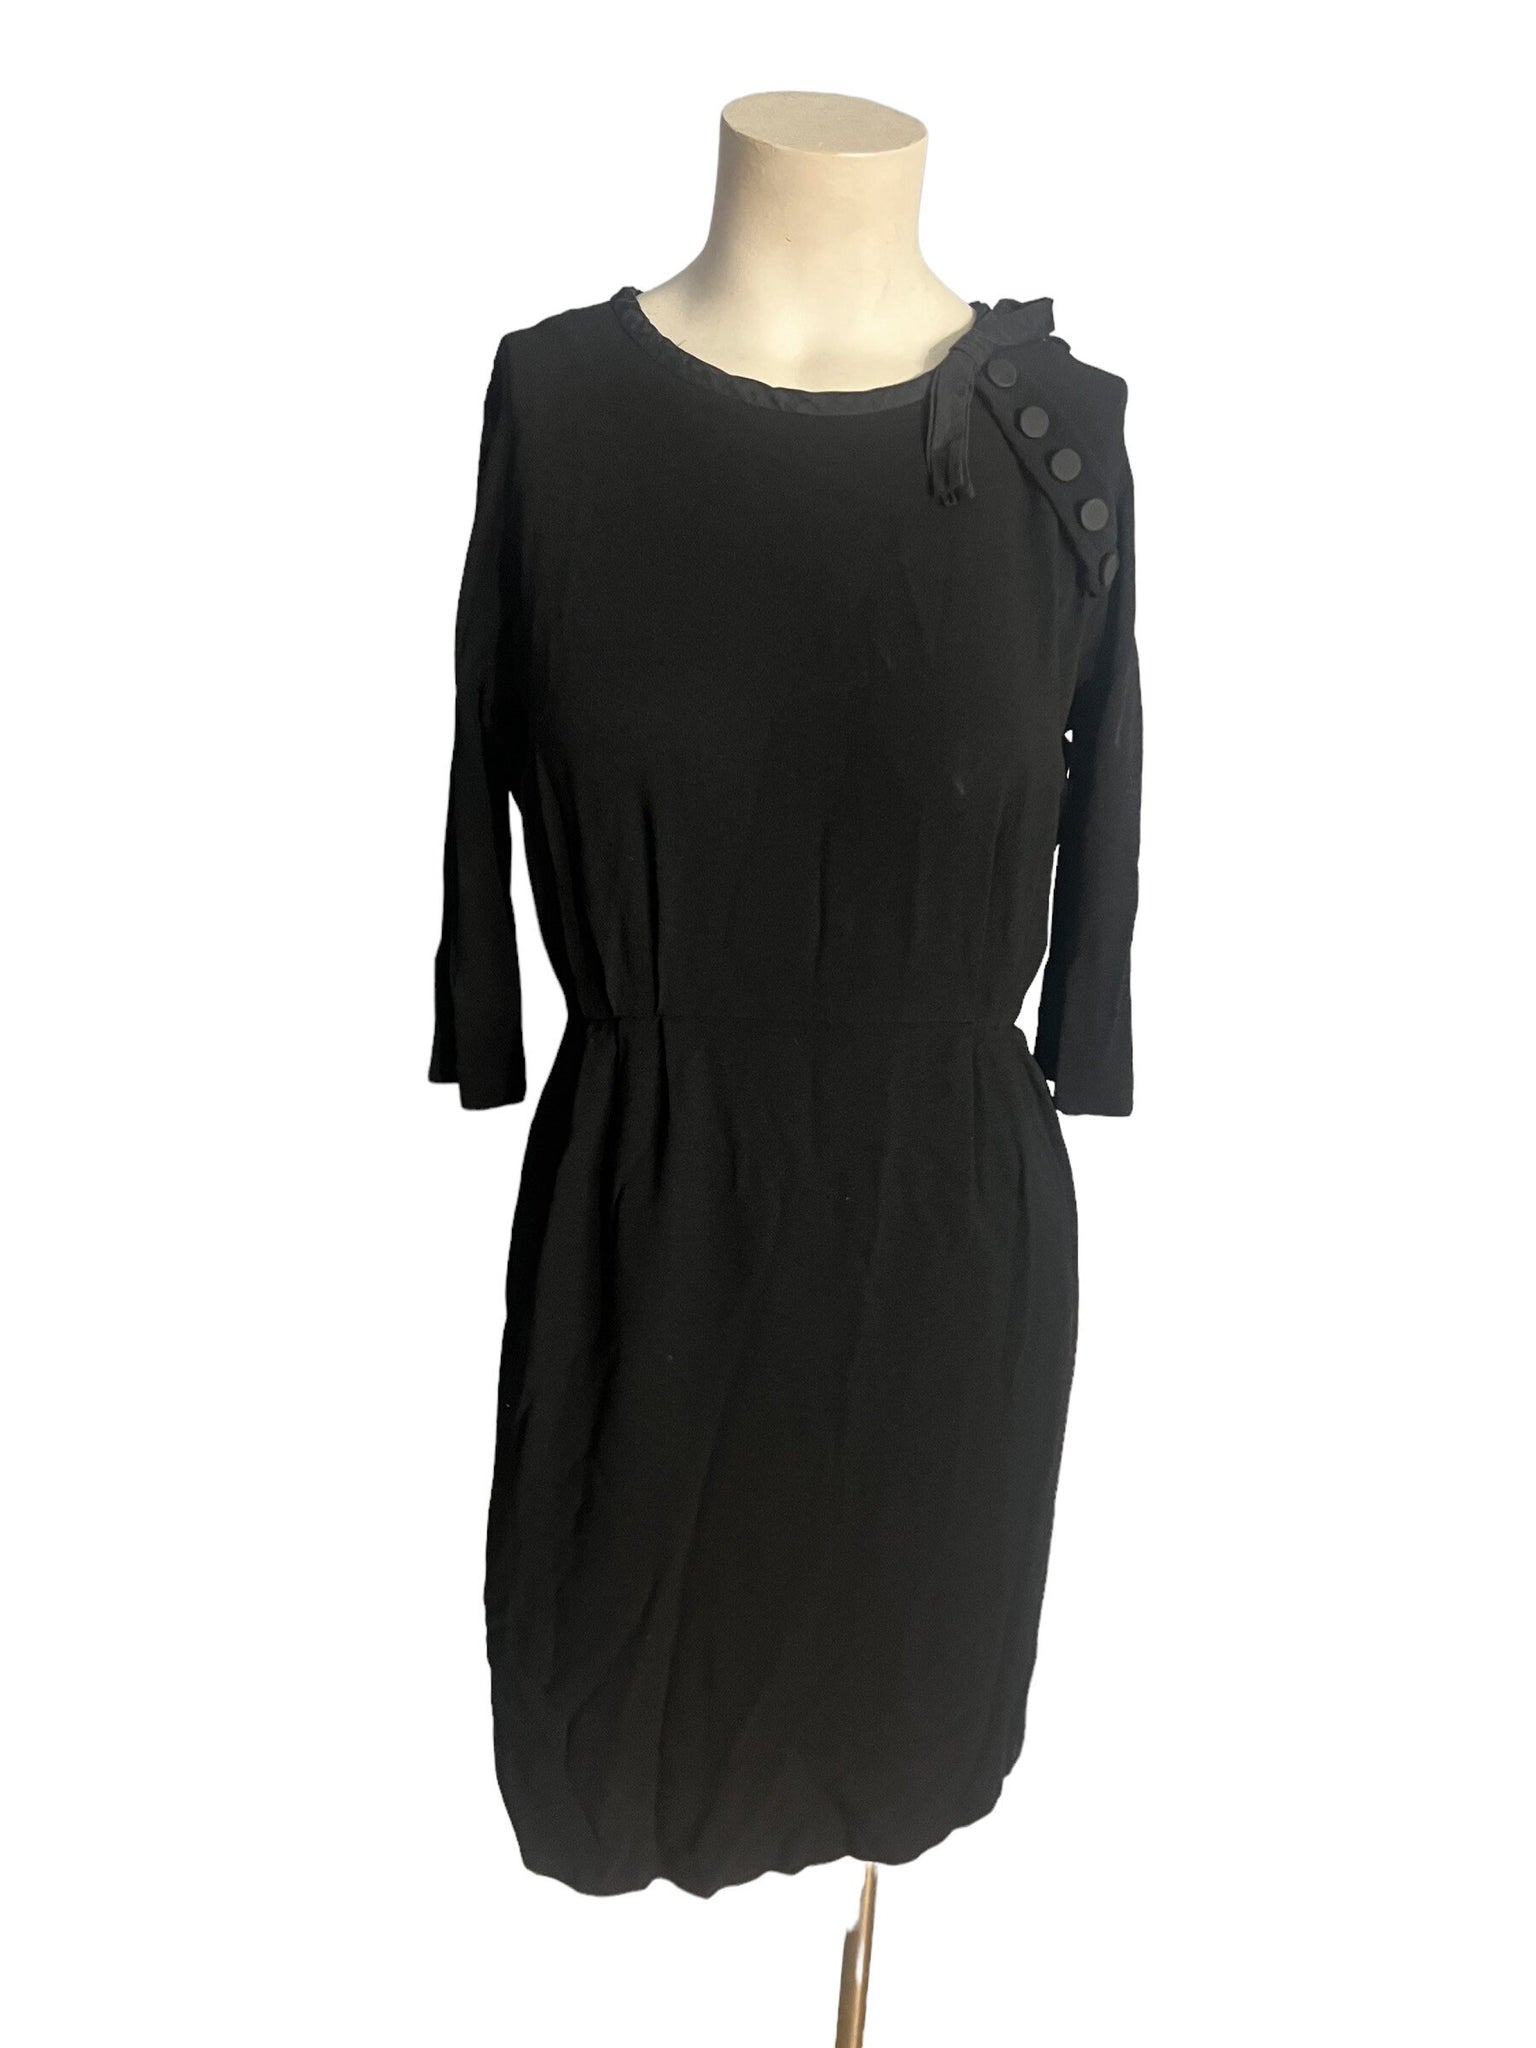 Vintage 50's black dress M